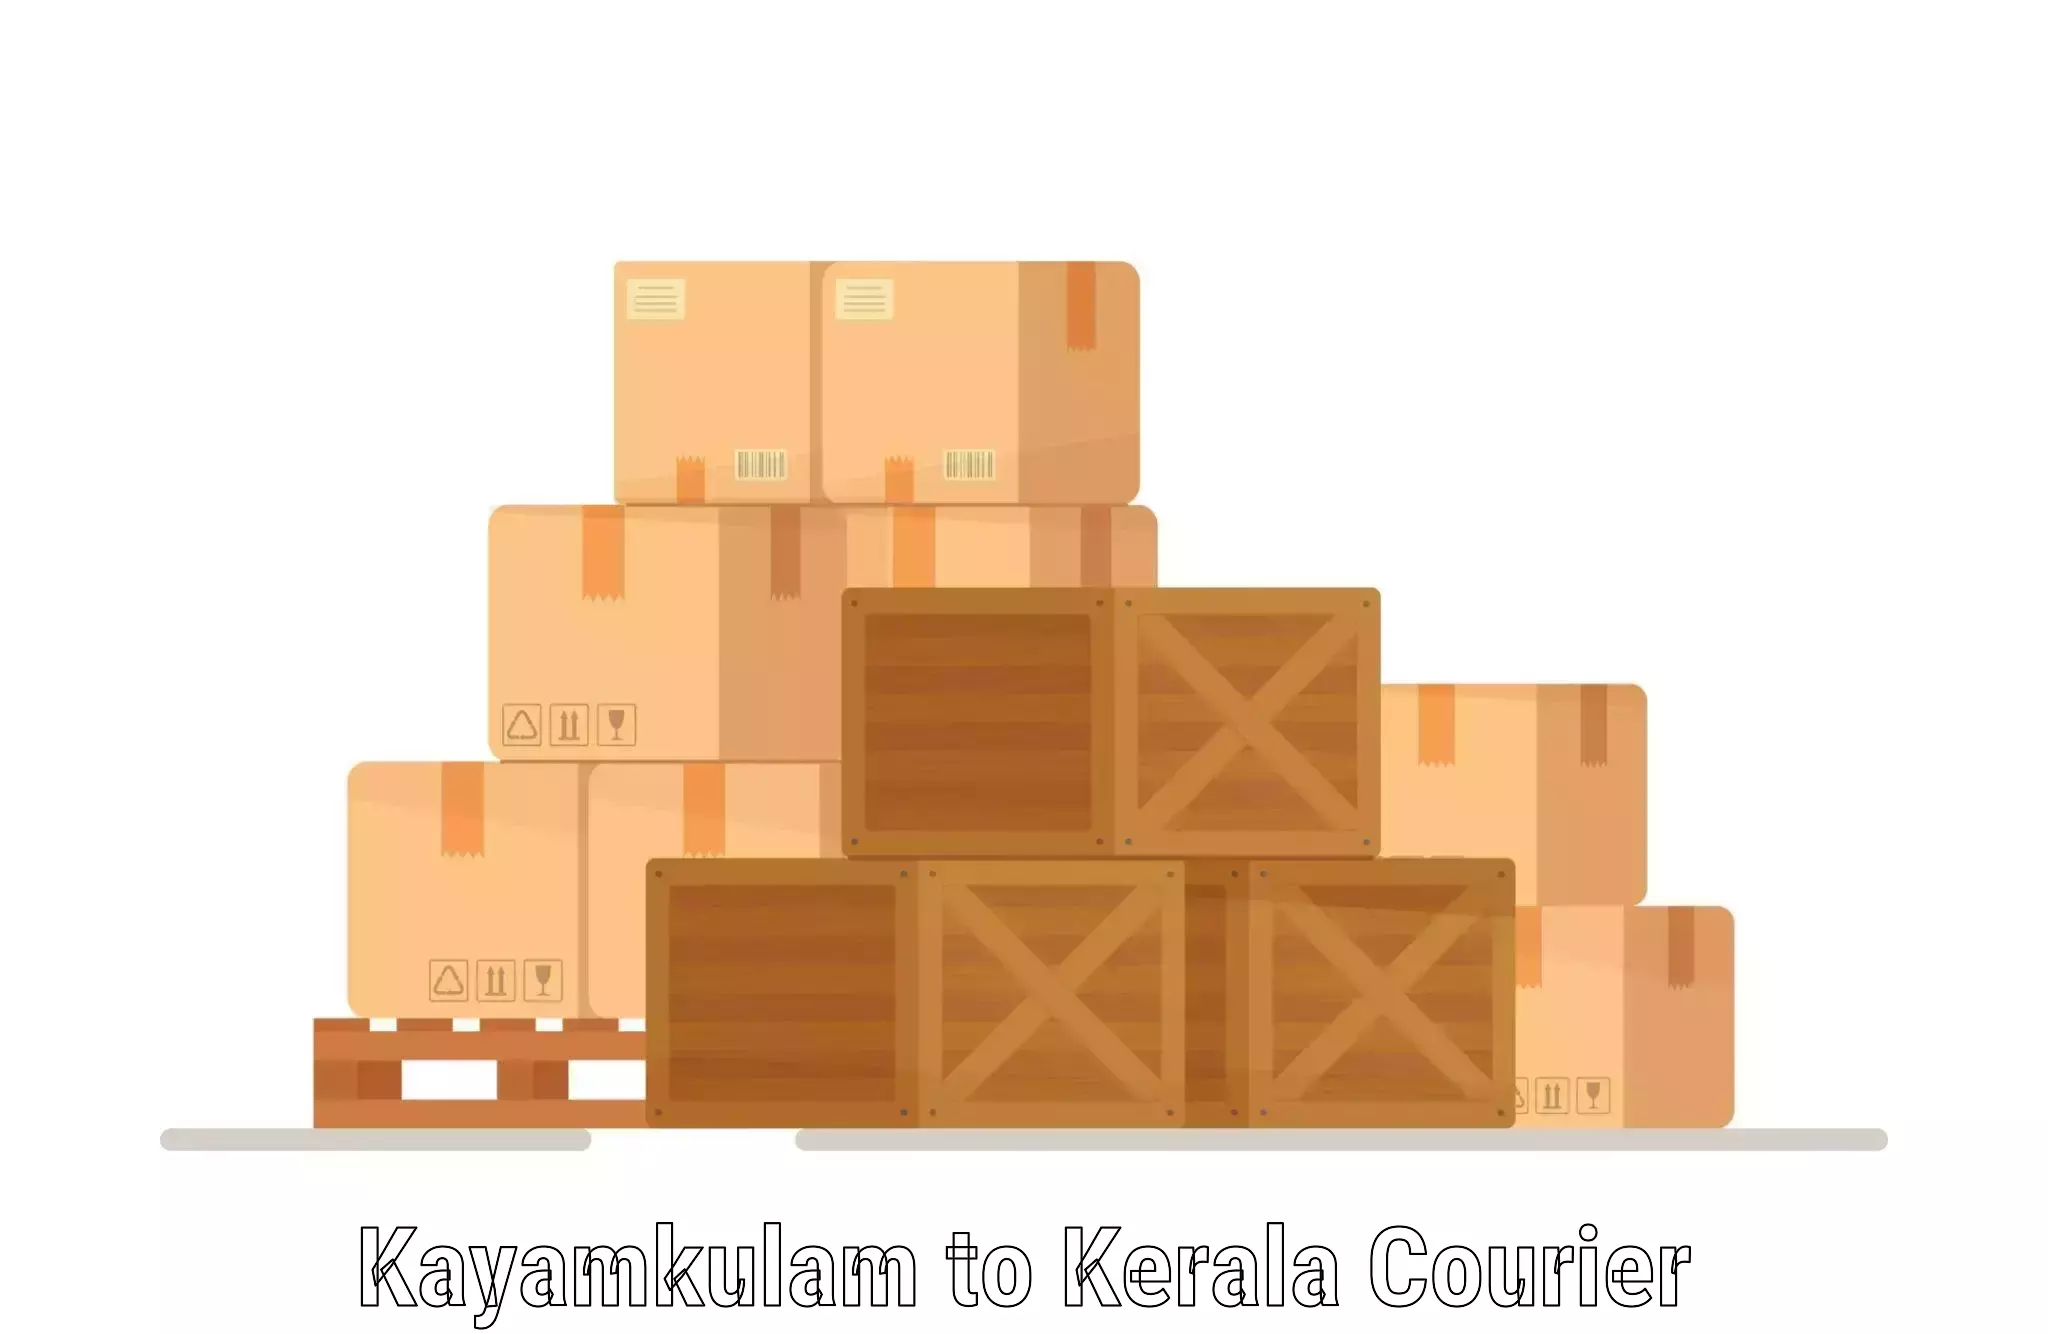 Express delivery capabilities Kayamkulam to Thodupuzha